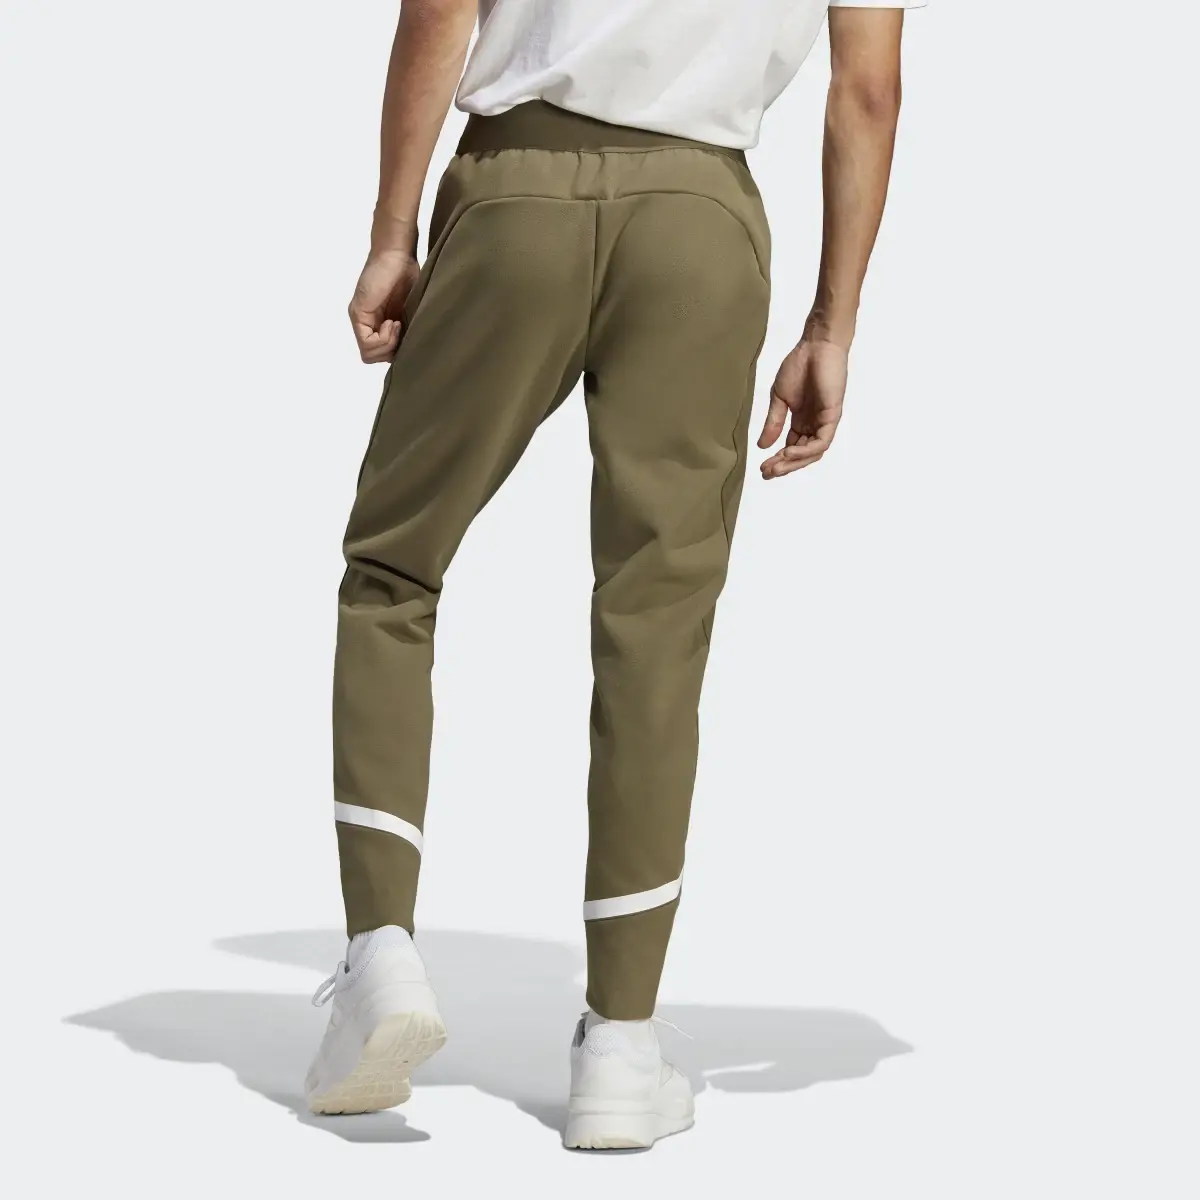 Adidas Designed 4 Gameday Pants. 2